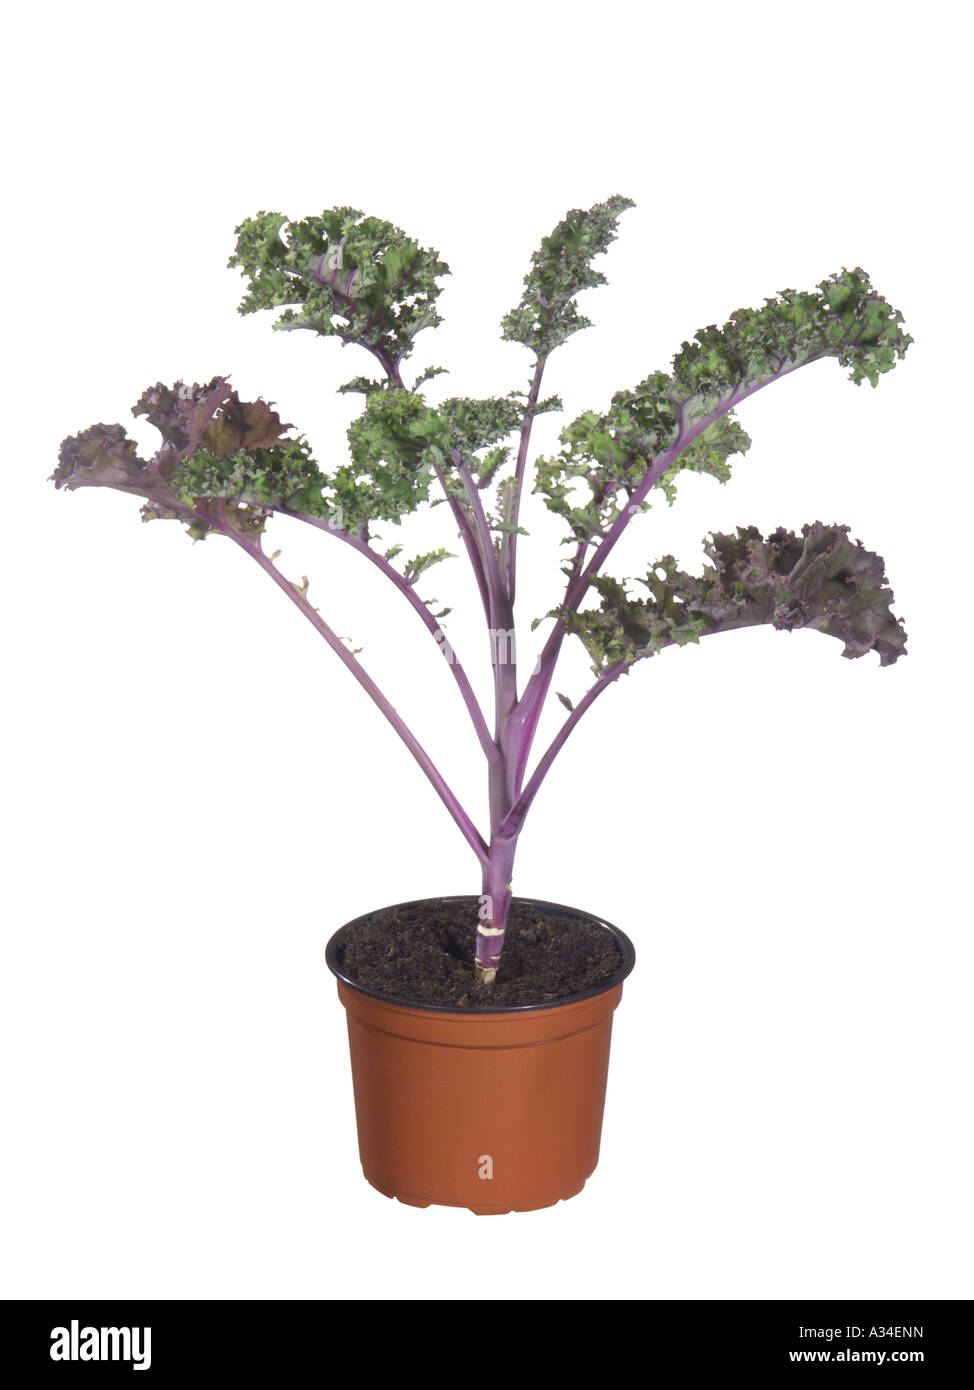 kale (Brassica oleracea var. sabellica, Brassica oleracea convar. acephala var. sabellica), young plant Stock Photo